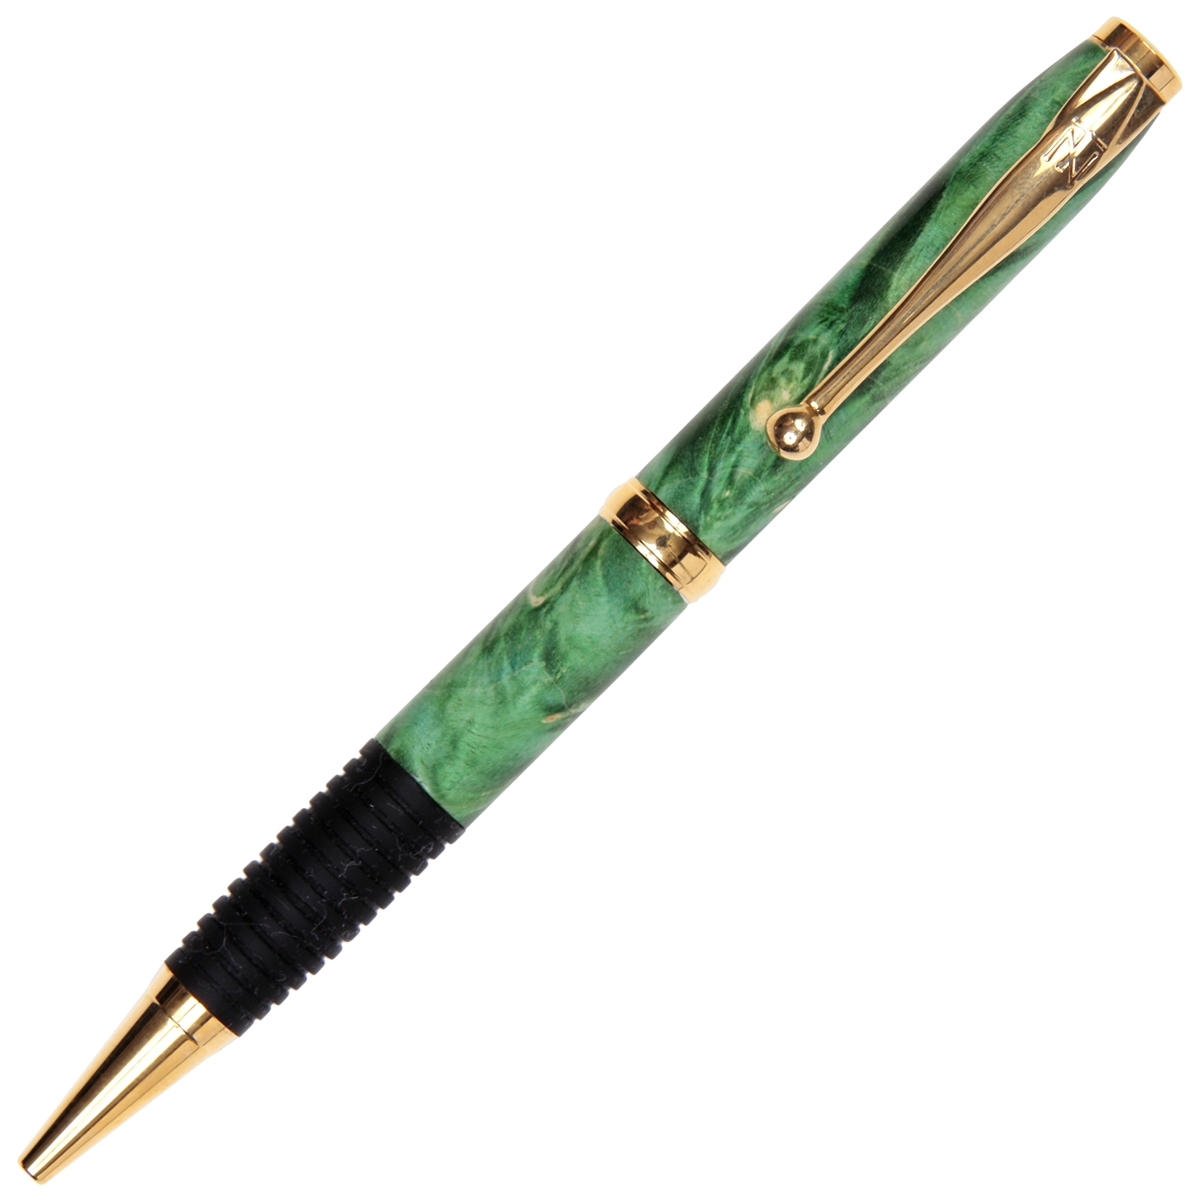 Green Maple Burl Comfort Twist Pen with Grip - Lanier Pens